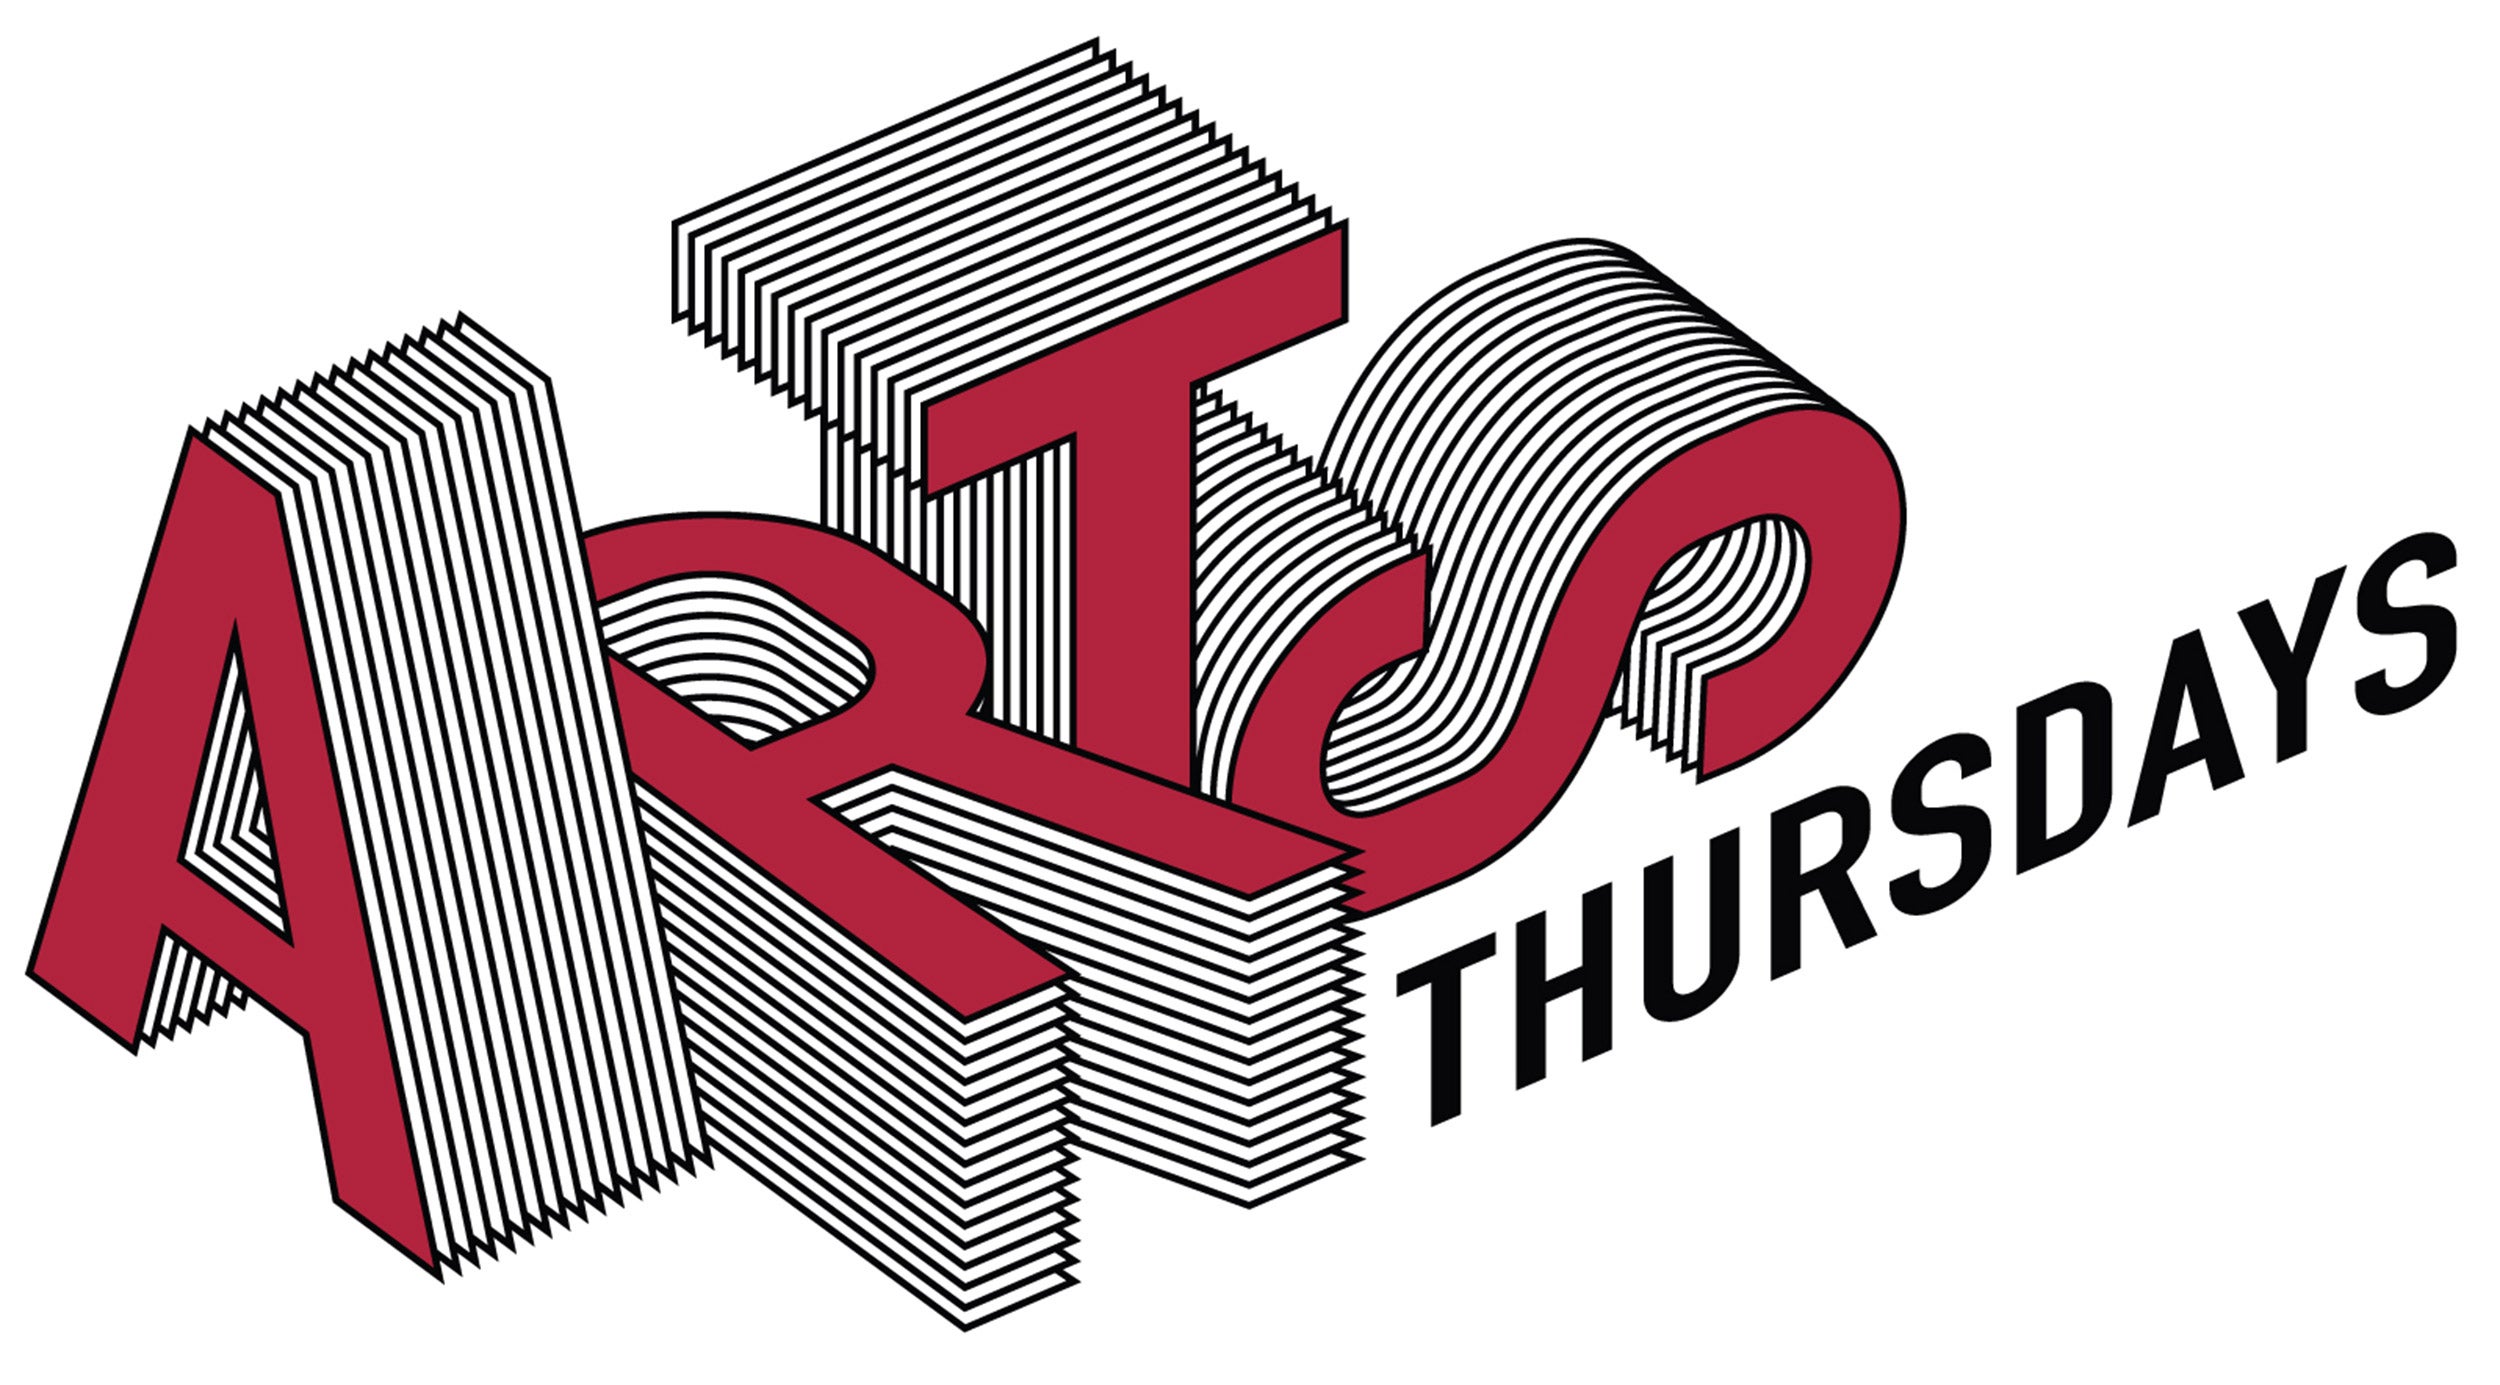 Arts Thursday logo.